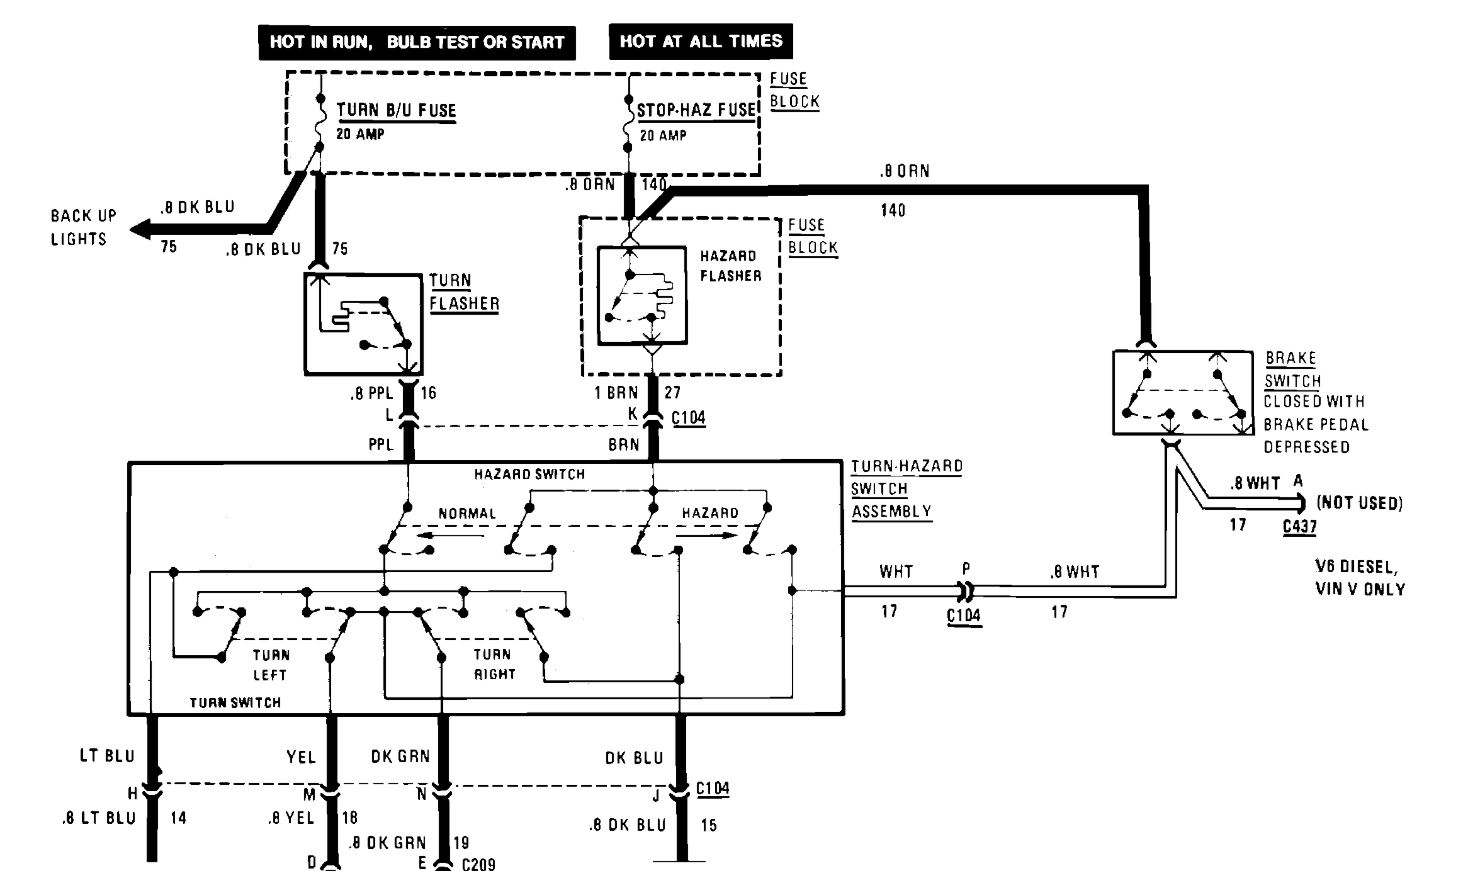 96 Buick Regal Wiring Diagram - Wiring Diagram Networks